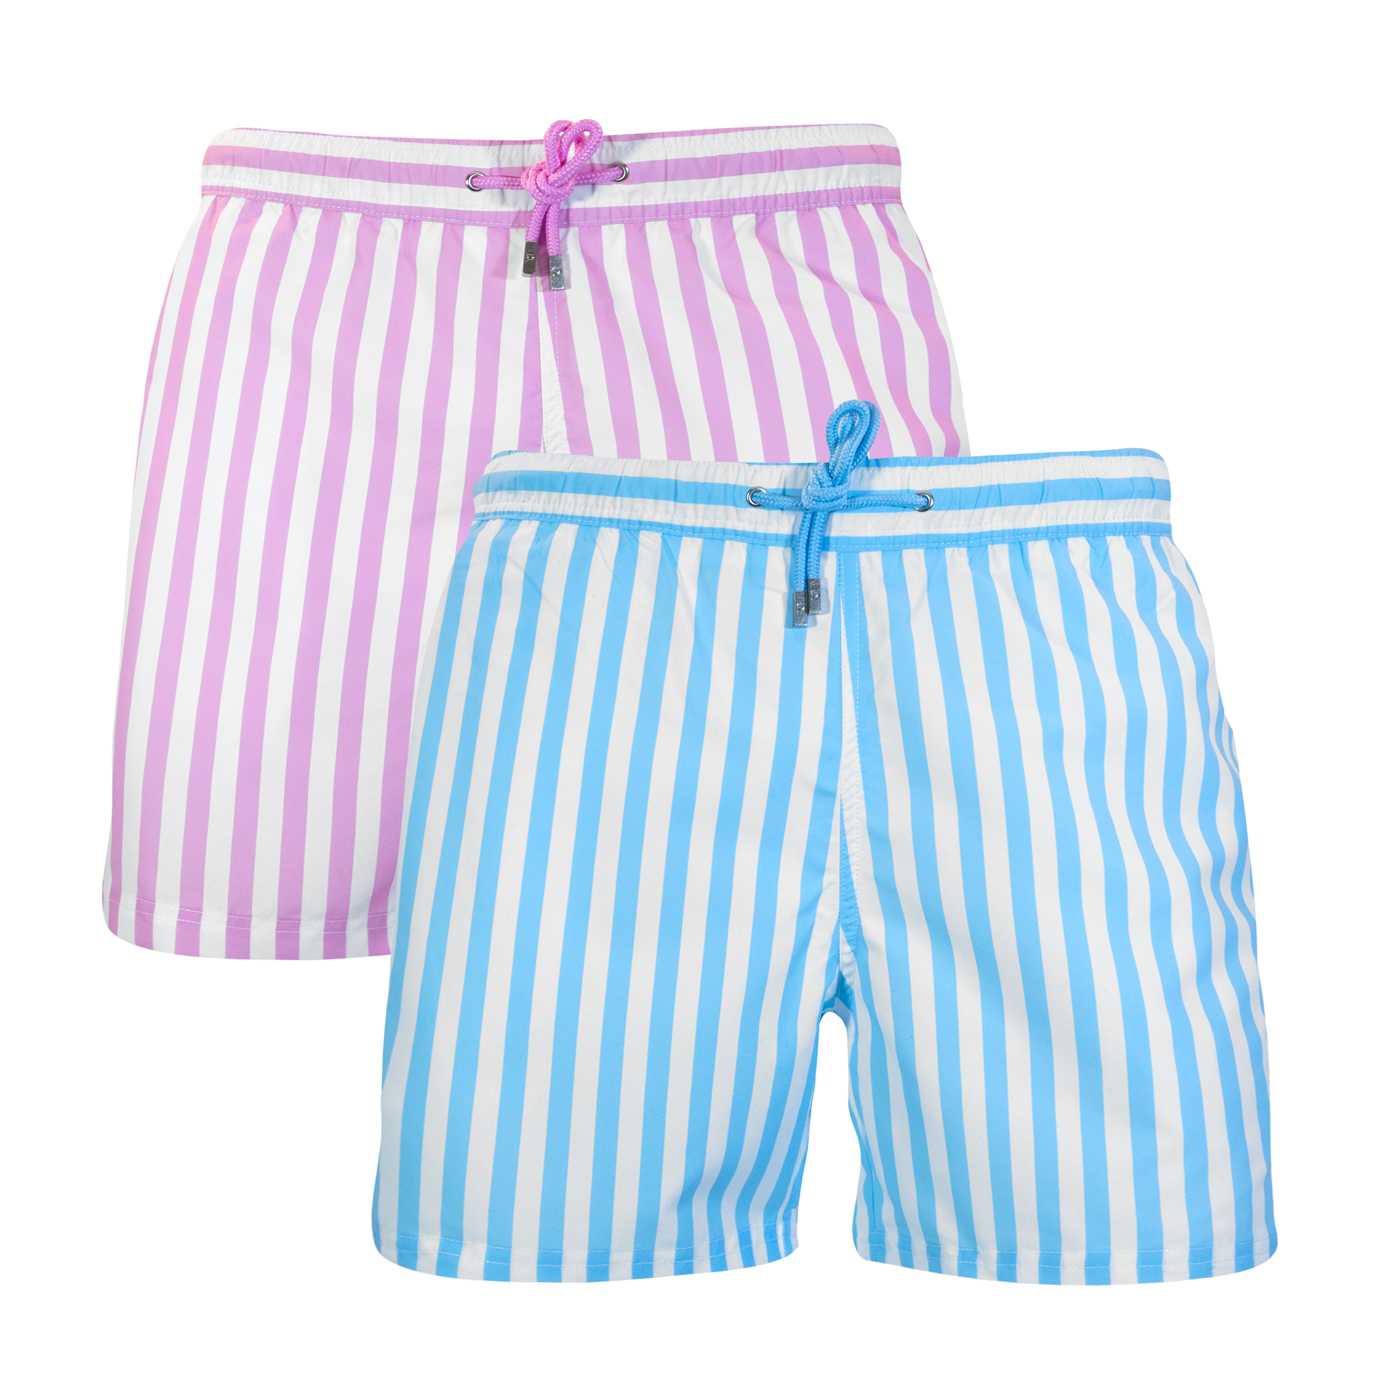 Stripes swim shorts